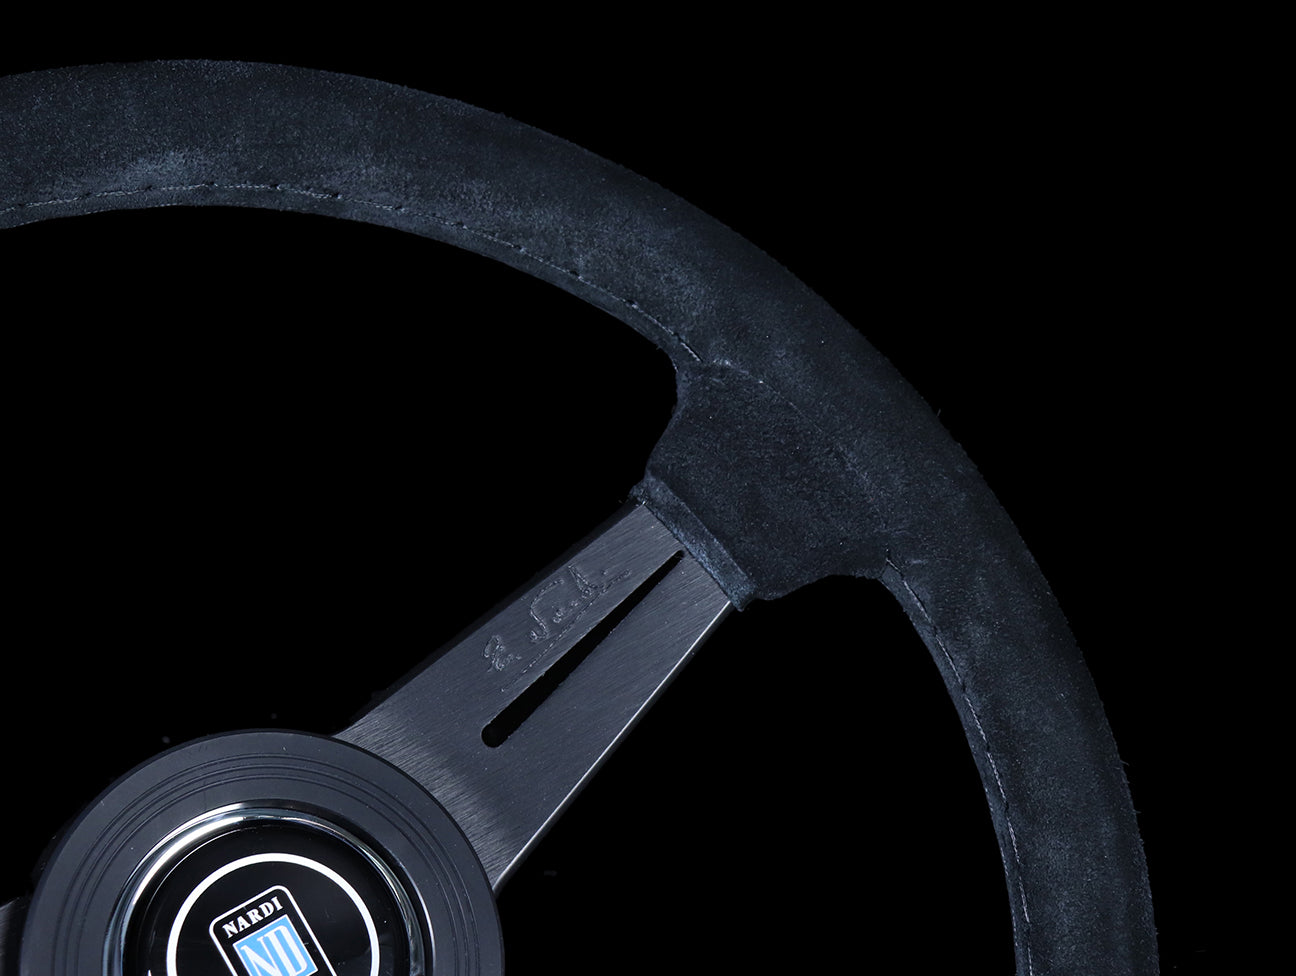 Nardi Classic 340mm Steering Wheel - Black Suede / Black Stitch